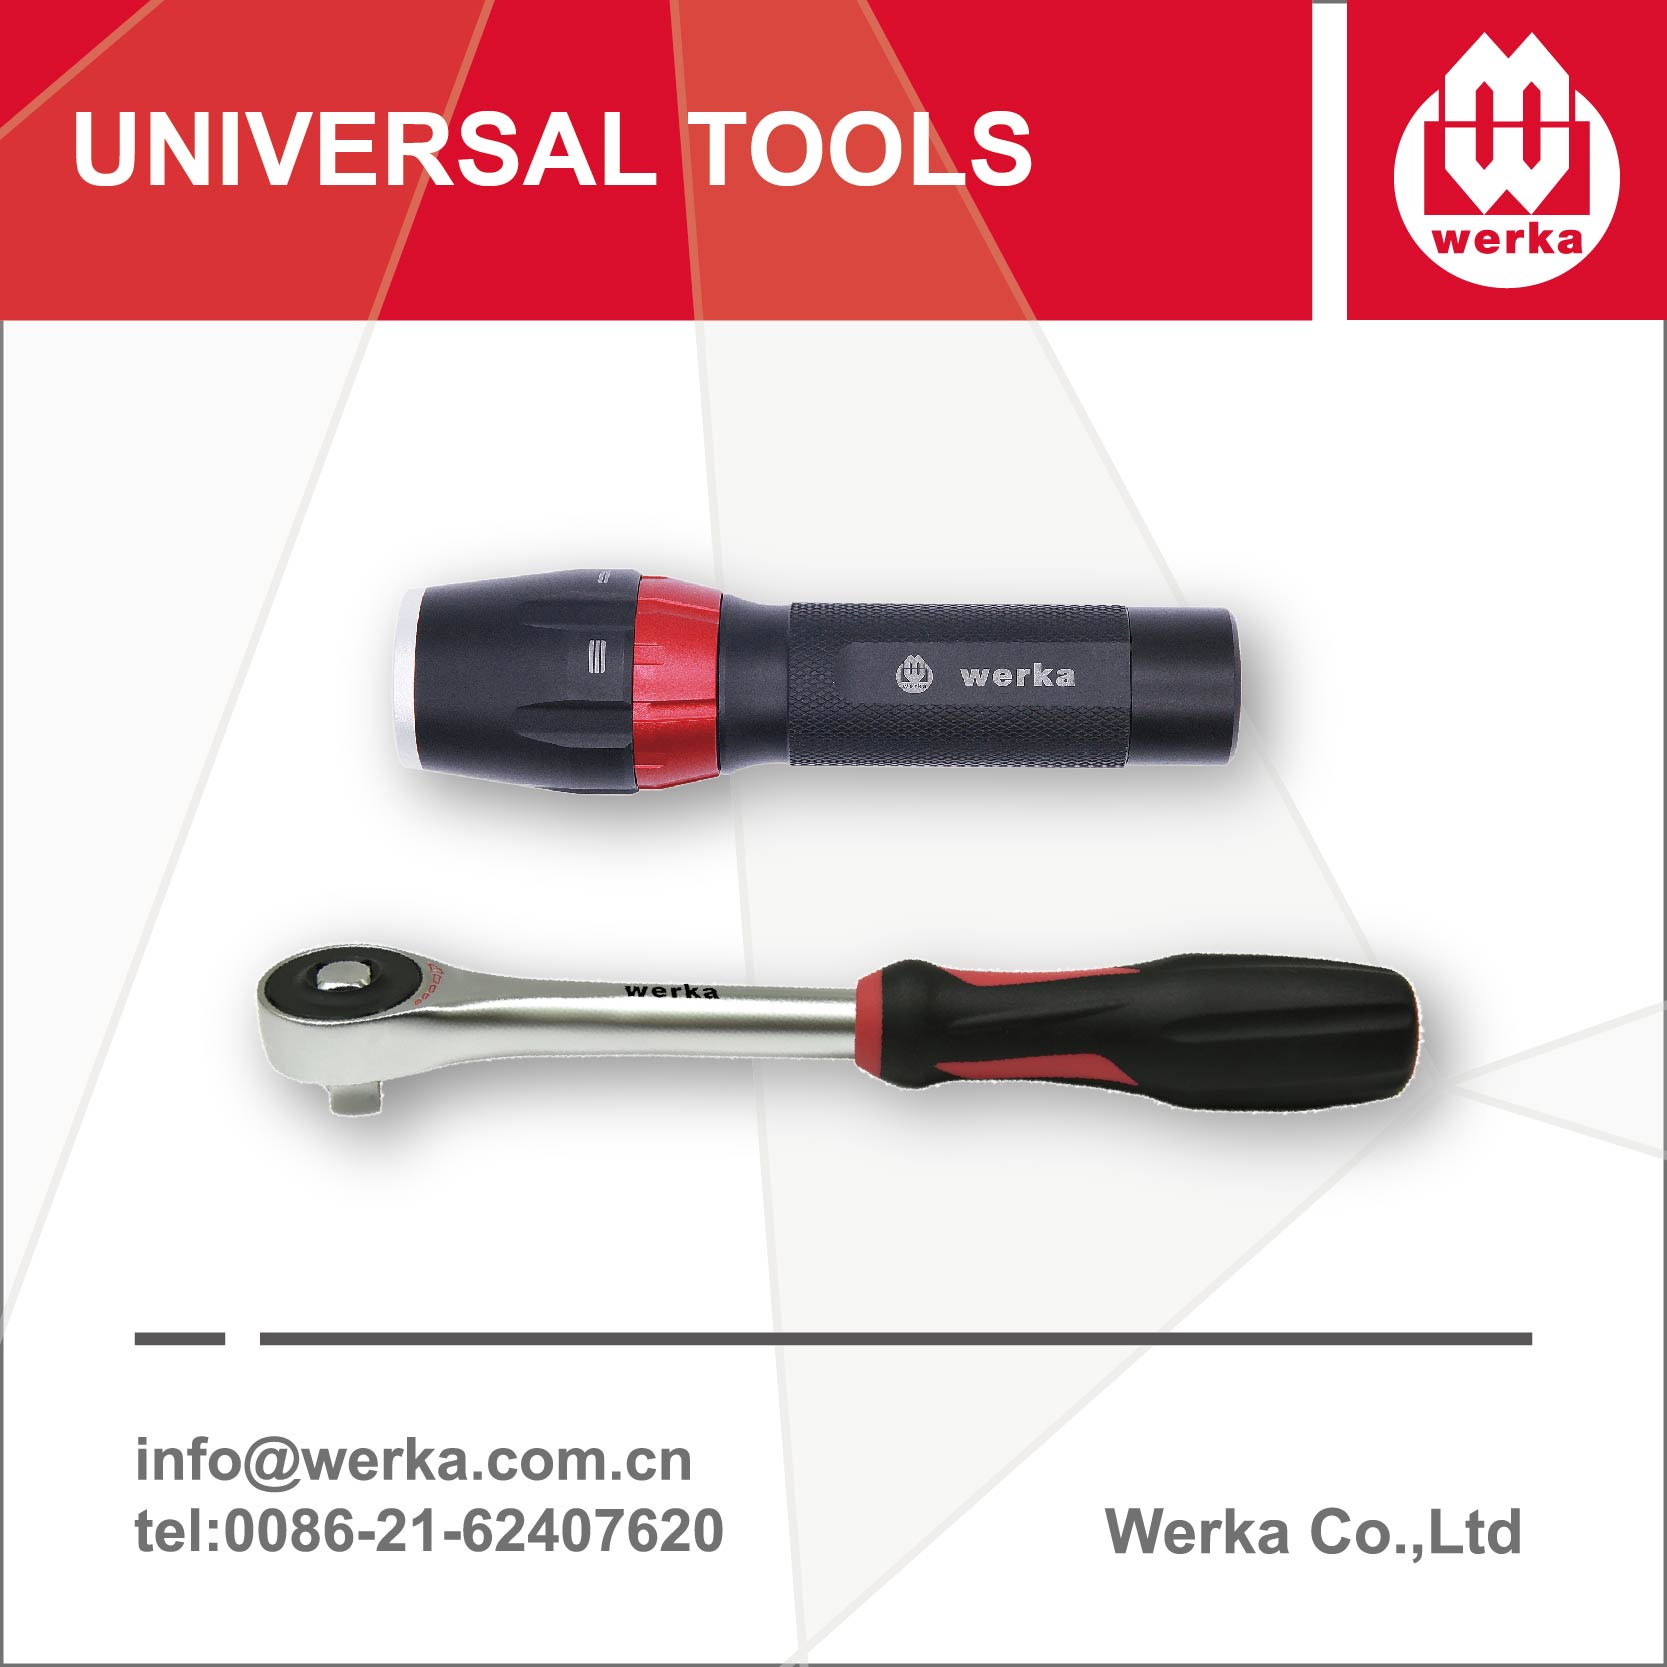 universal tools